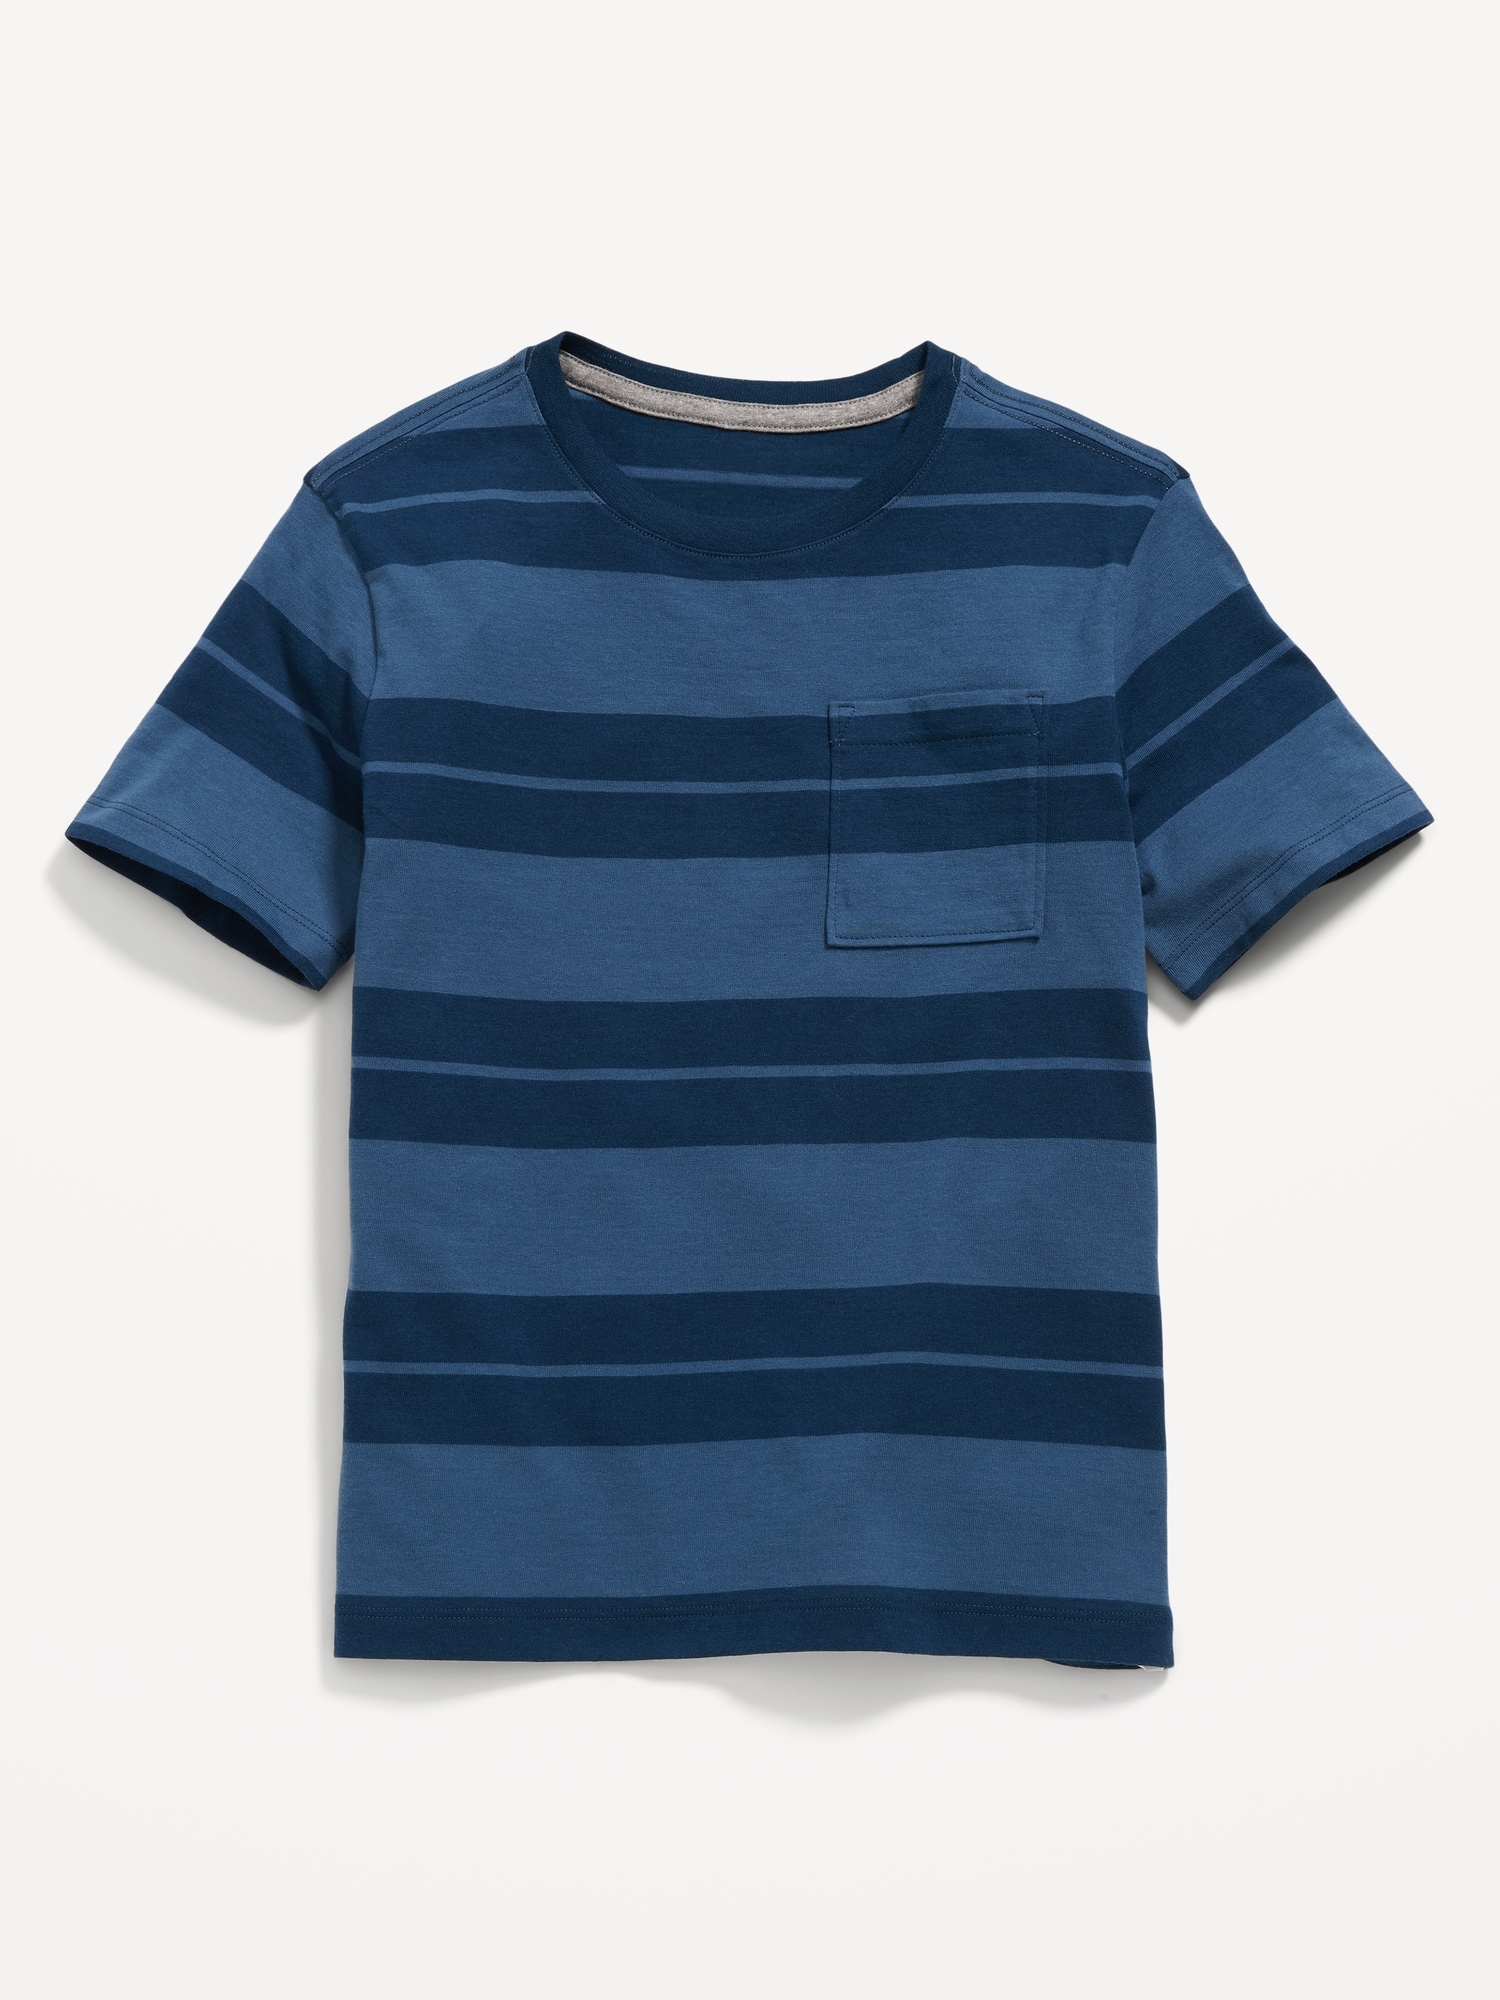 Softest Short-Sleeve Striped Pocket T-Shirt for Boys | Old Navy